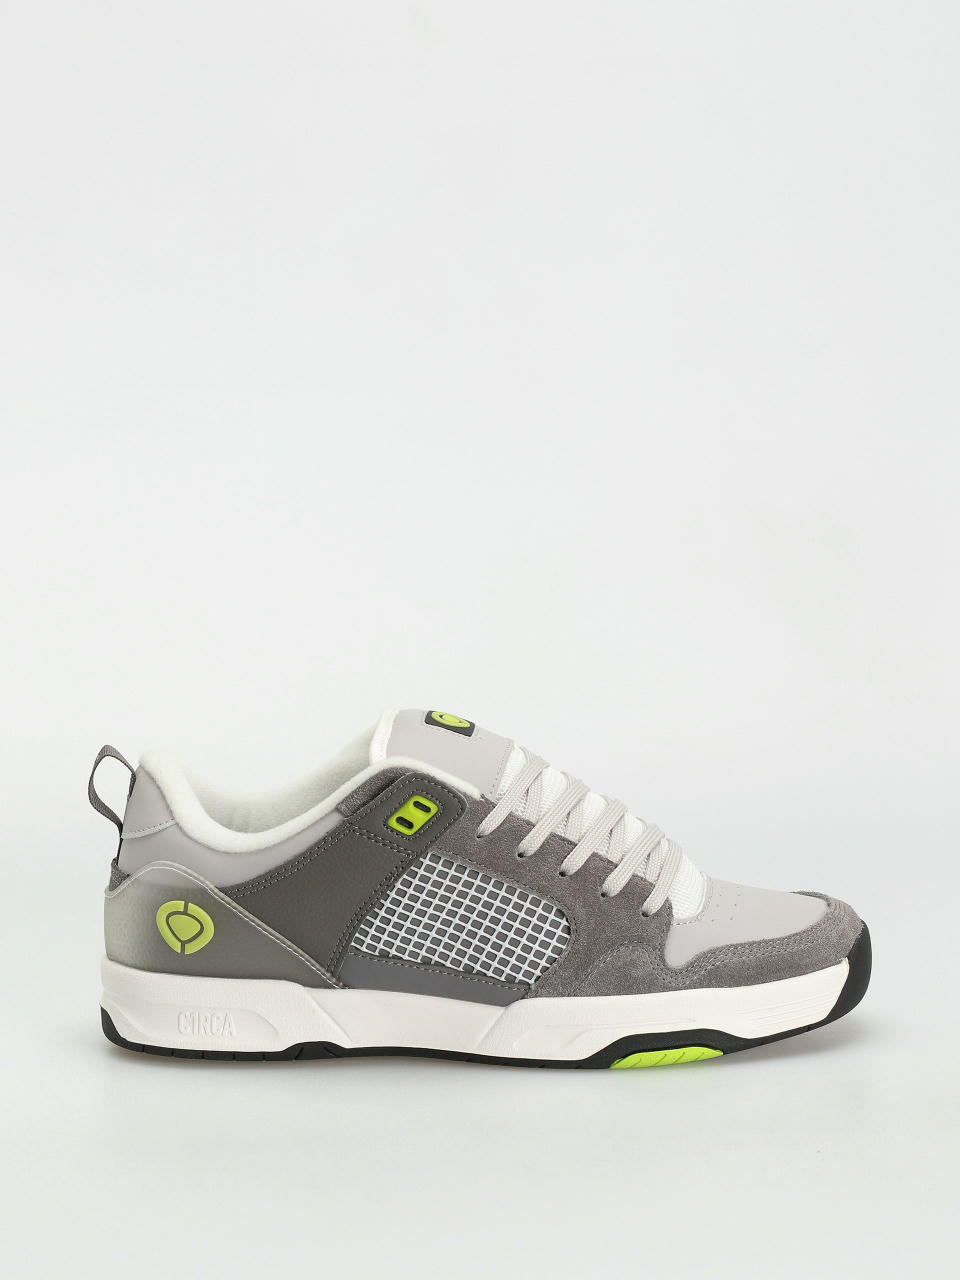 Circa Tave Tt Schuhe (grey/black/lime green)